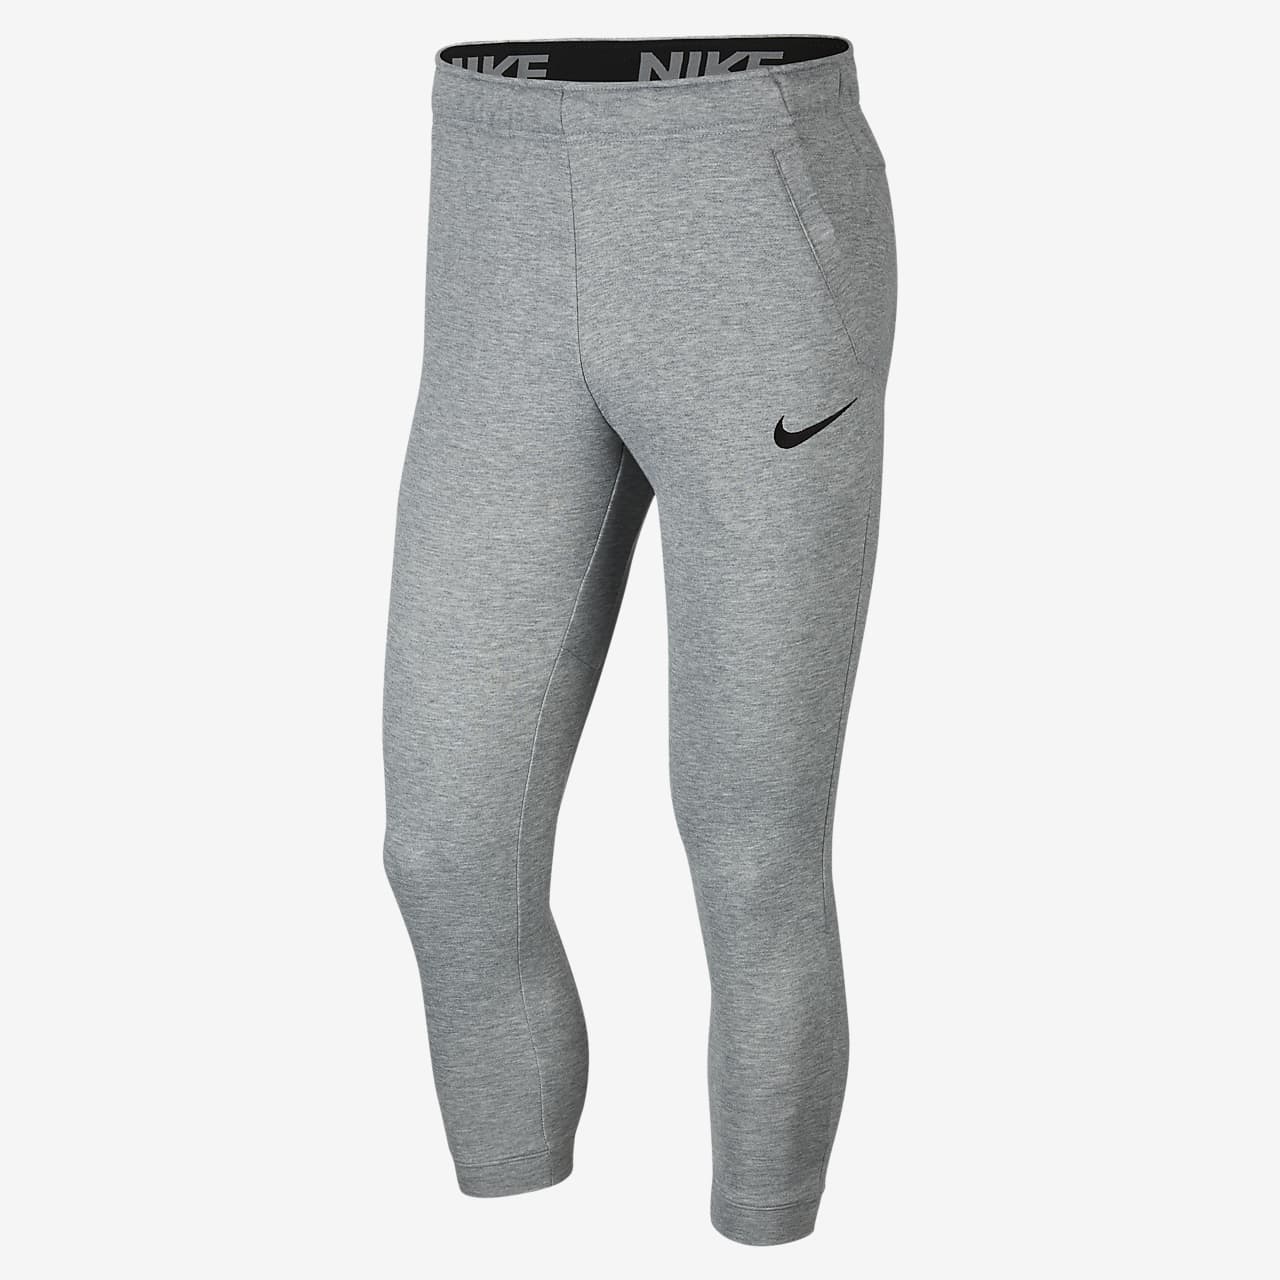 nike training tapered jogging bottoms grey